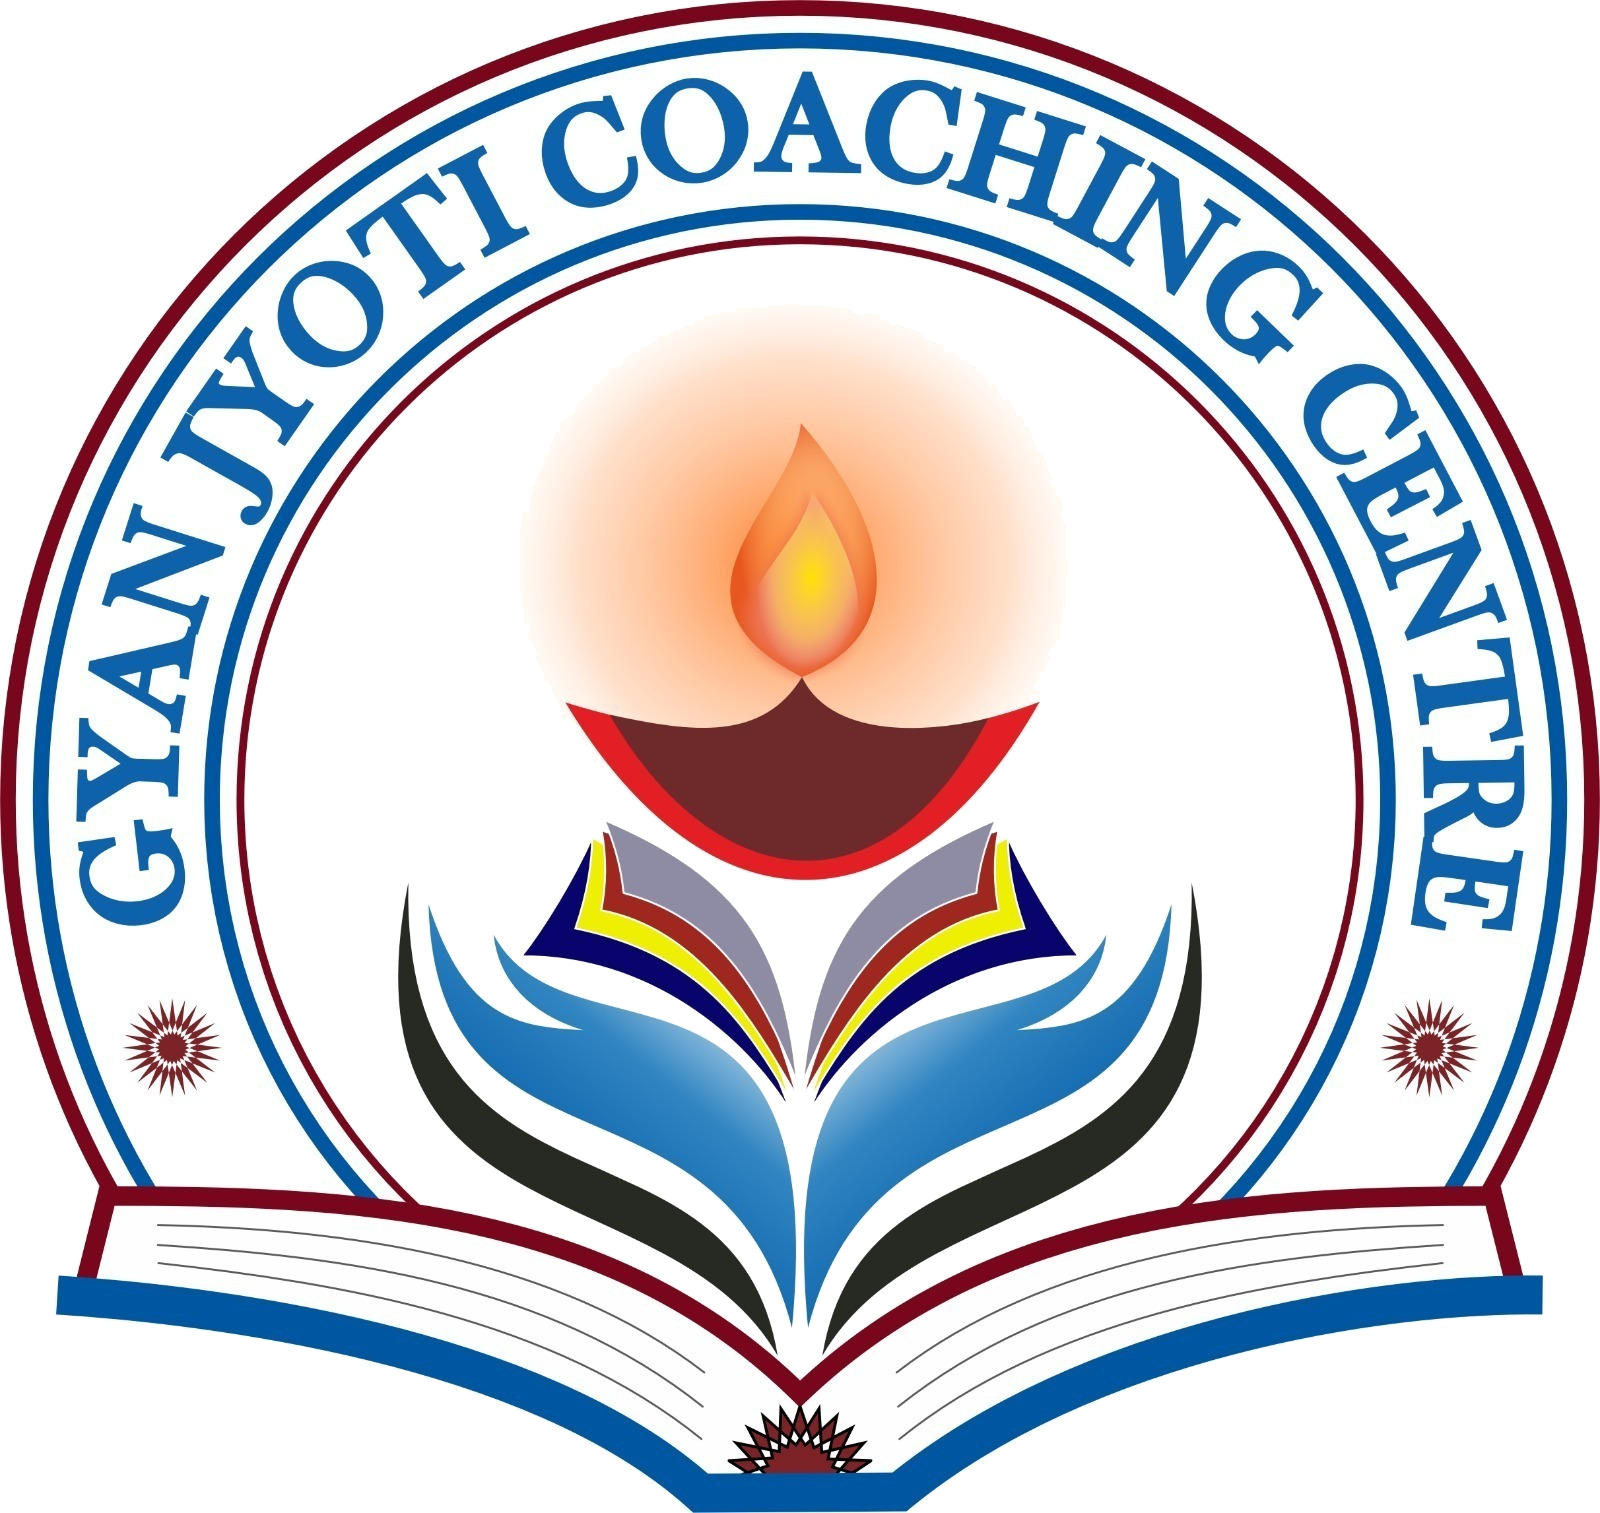 Gyan Jyoti Coaching Centre